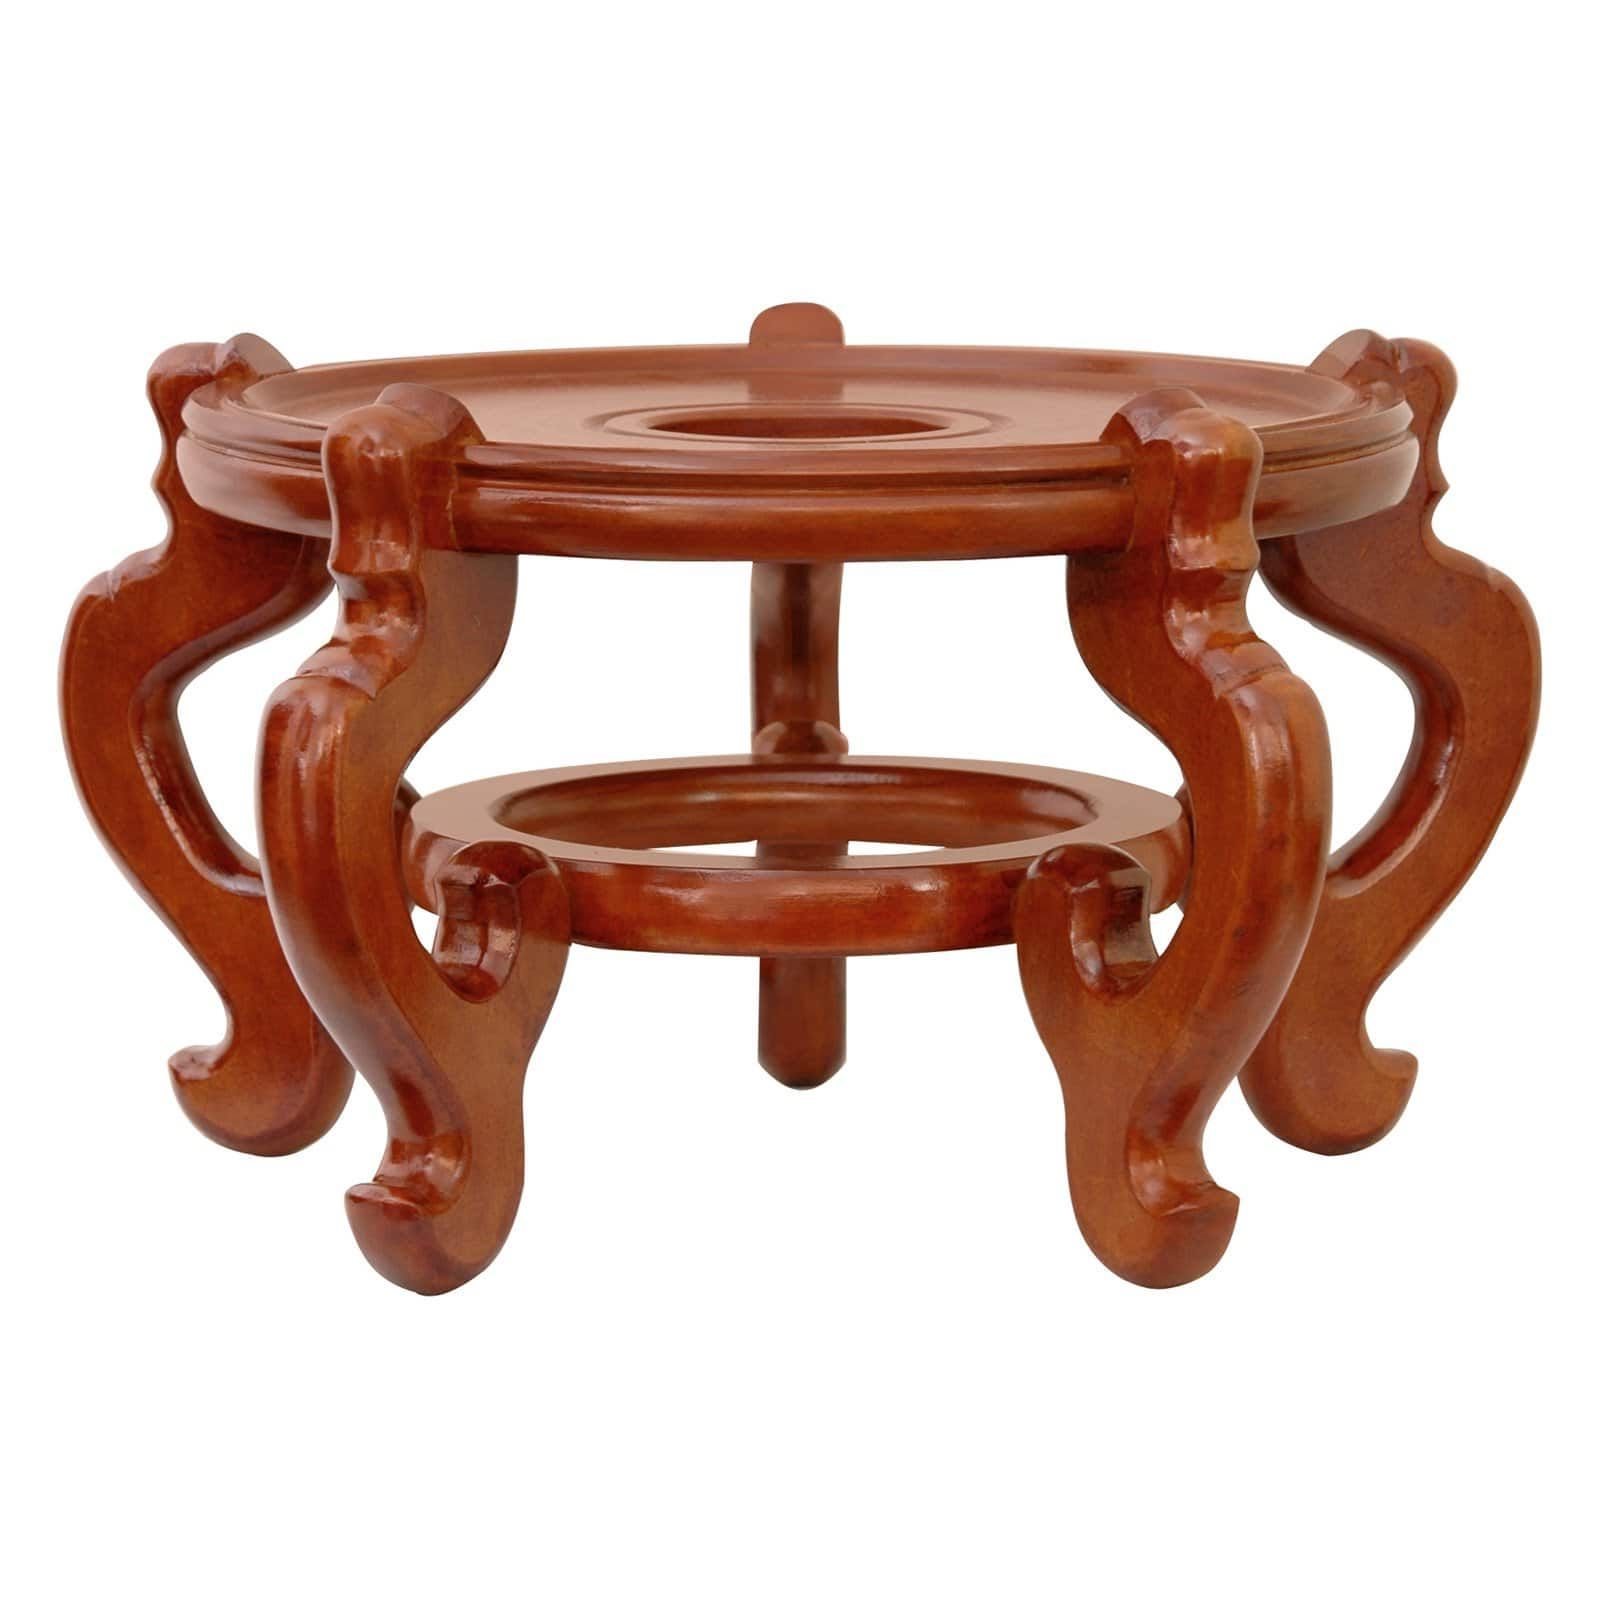 Preferred Oriental Furniture Rosewood Fishbowl Stand, Honey – Walmart Regarding Fishbowl Plant Stands (View 3 of 10)